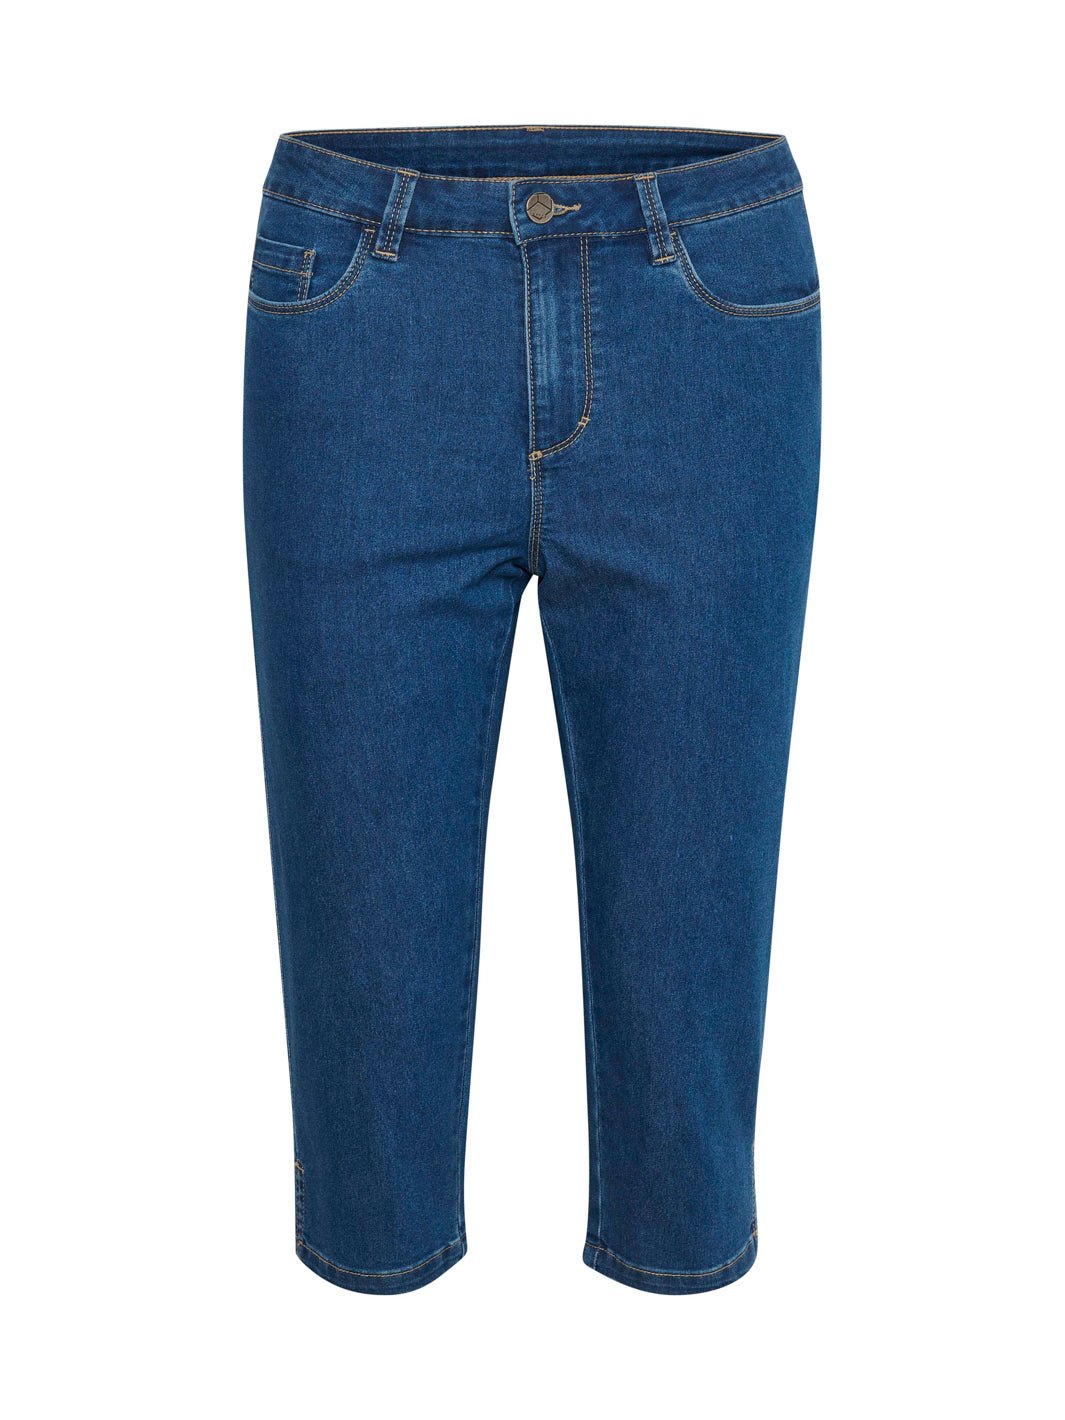 Kaffe KAvicky capri jeans medium blue wash - Online-Mode